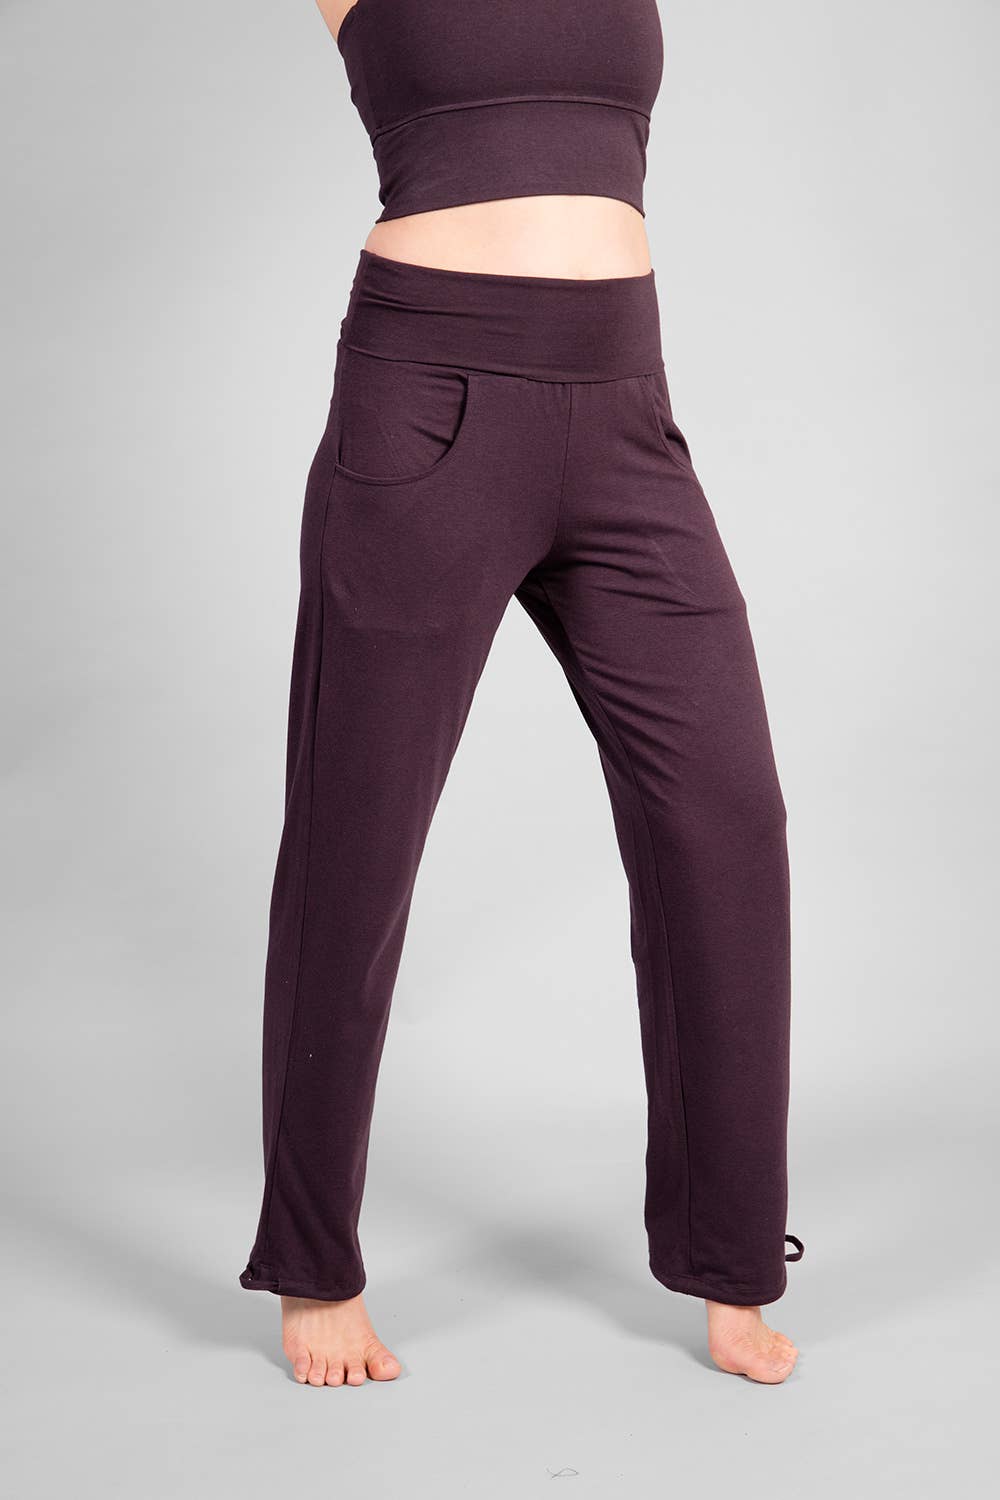 Lilii Women’s Loose Fit Pants - Dark purple